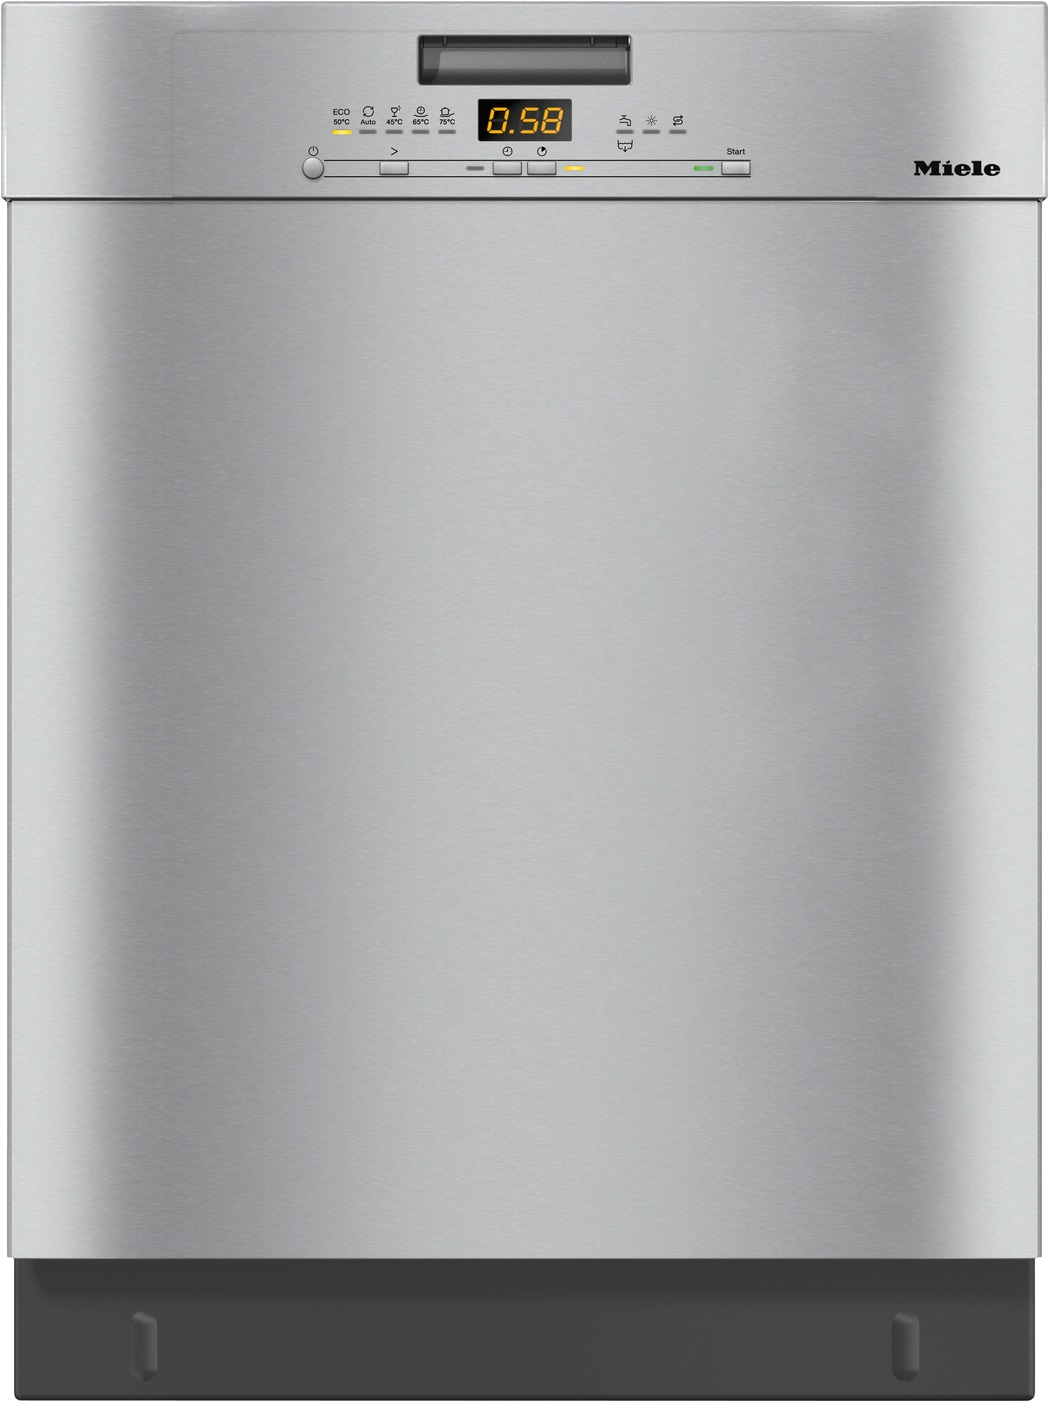 Miele opvaskemaskine G5022SCUCLST (stål) | Elgiganten